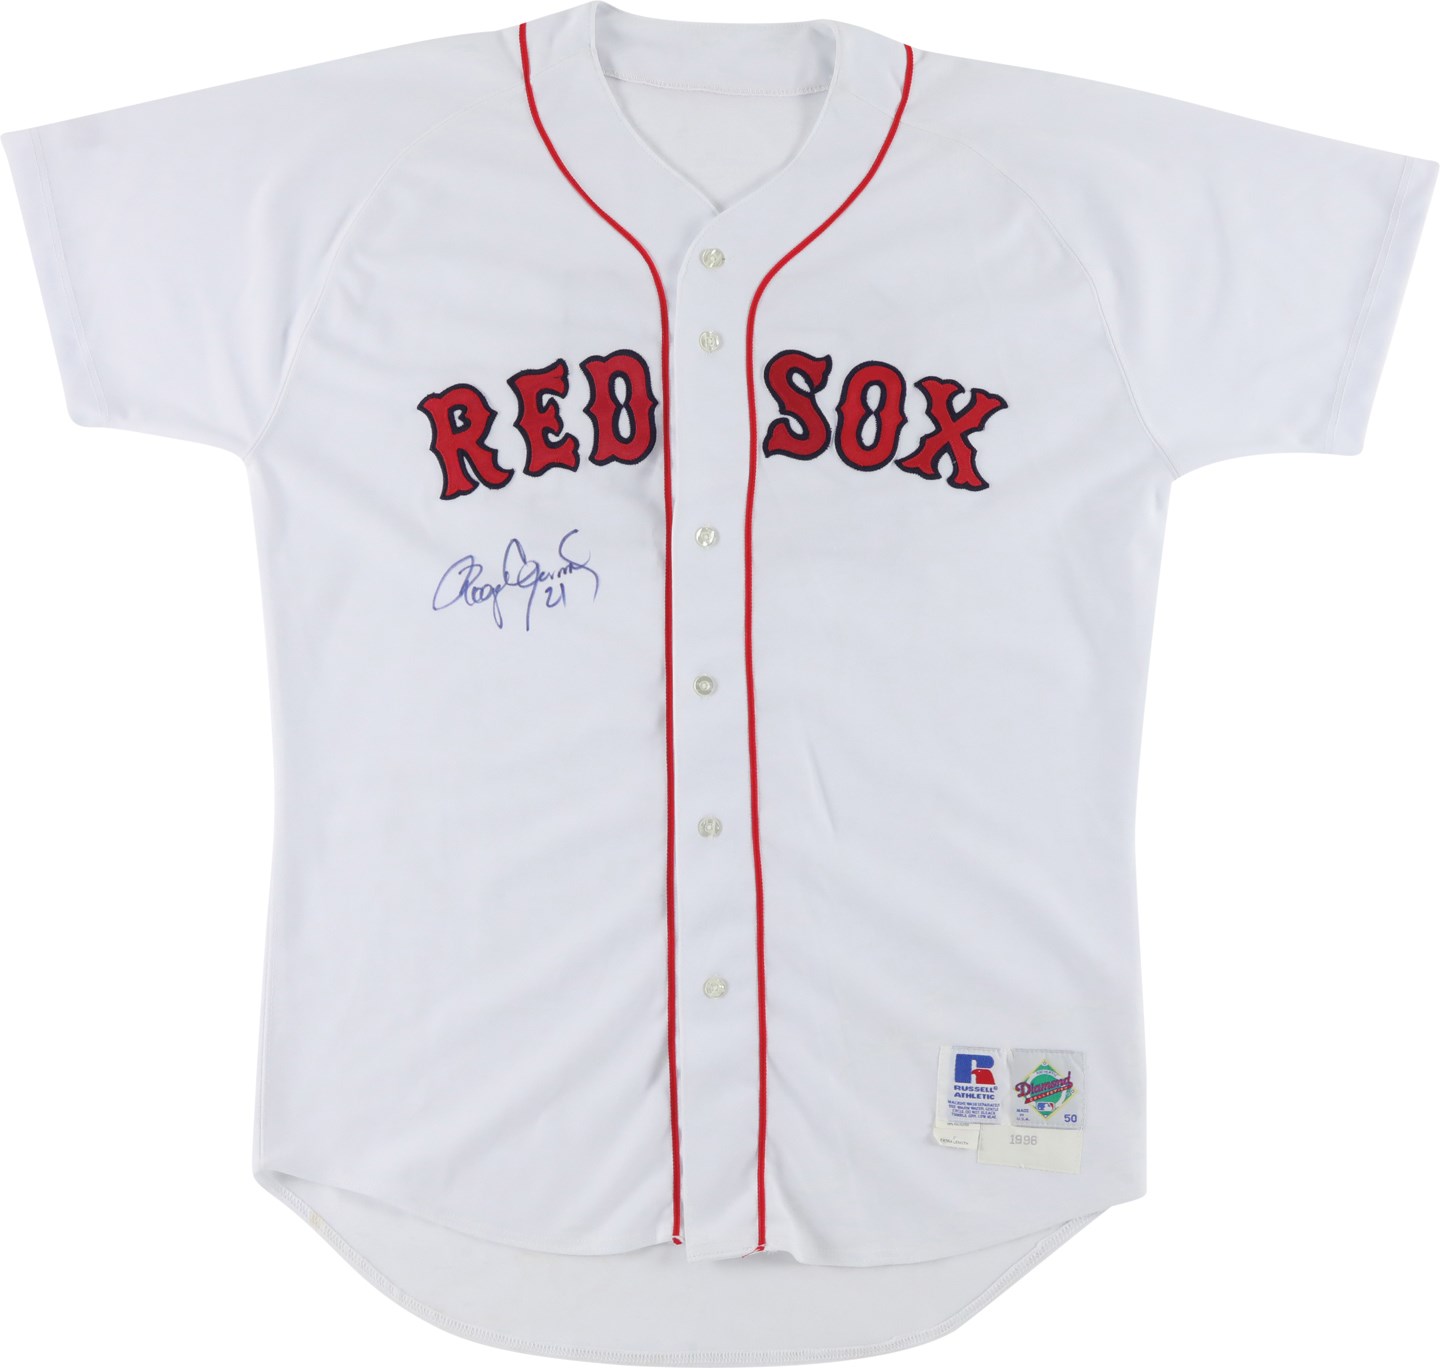 Baseball Equipment - 1996 Roger Clemens Boston Red Sox Signed Game Worn Jersey (PSA)